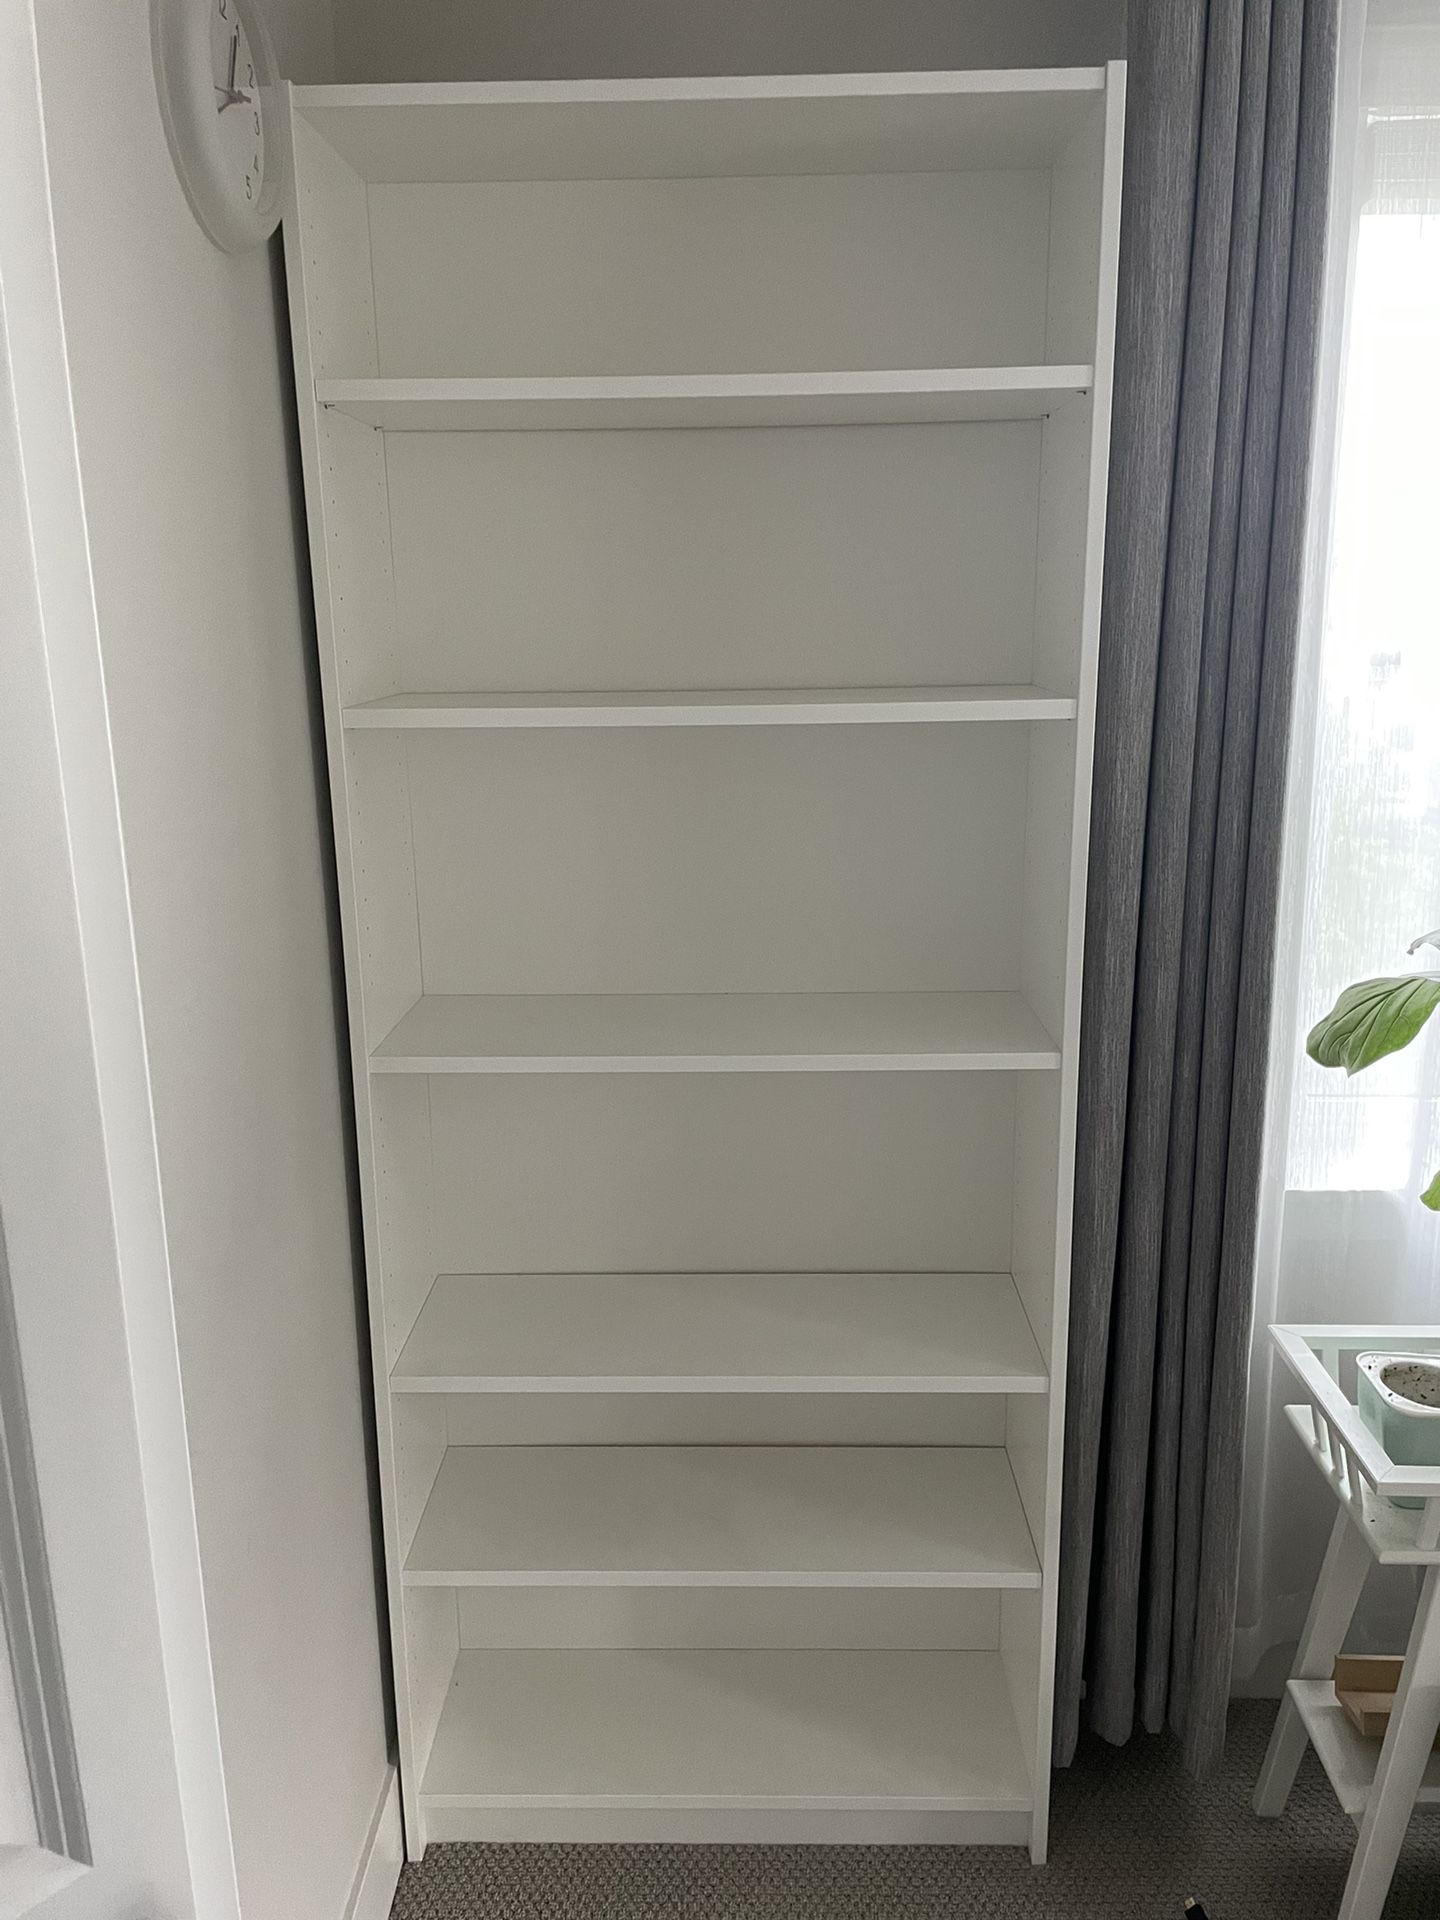 IKEA BILLY Bookcase shelf